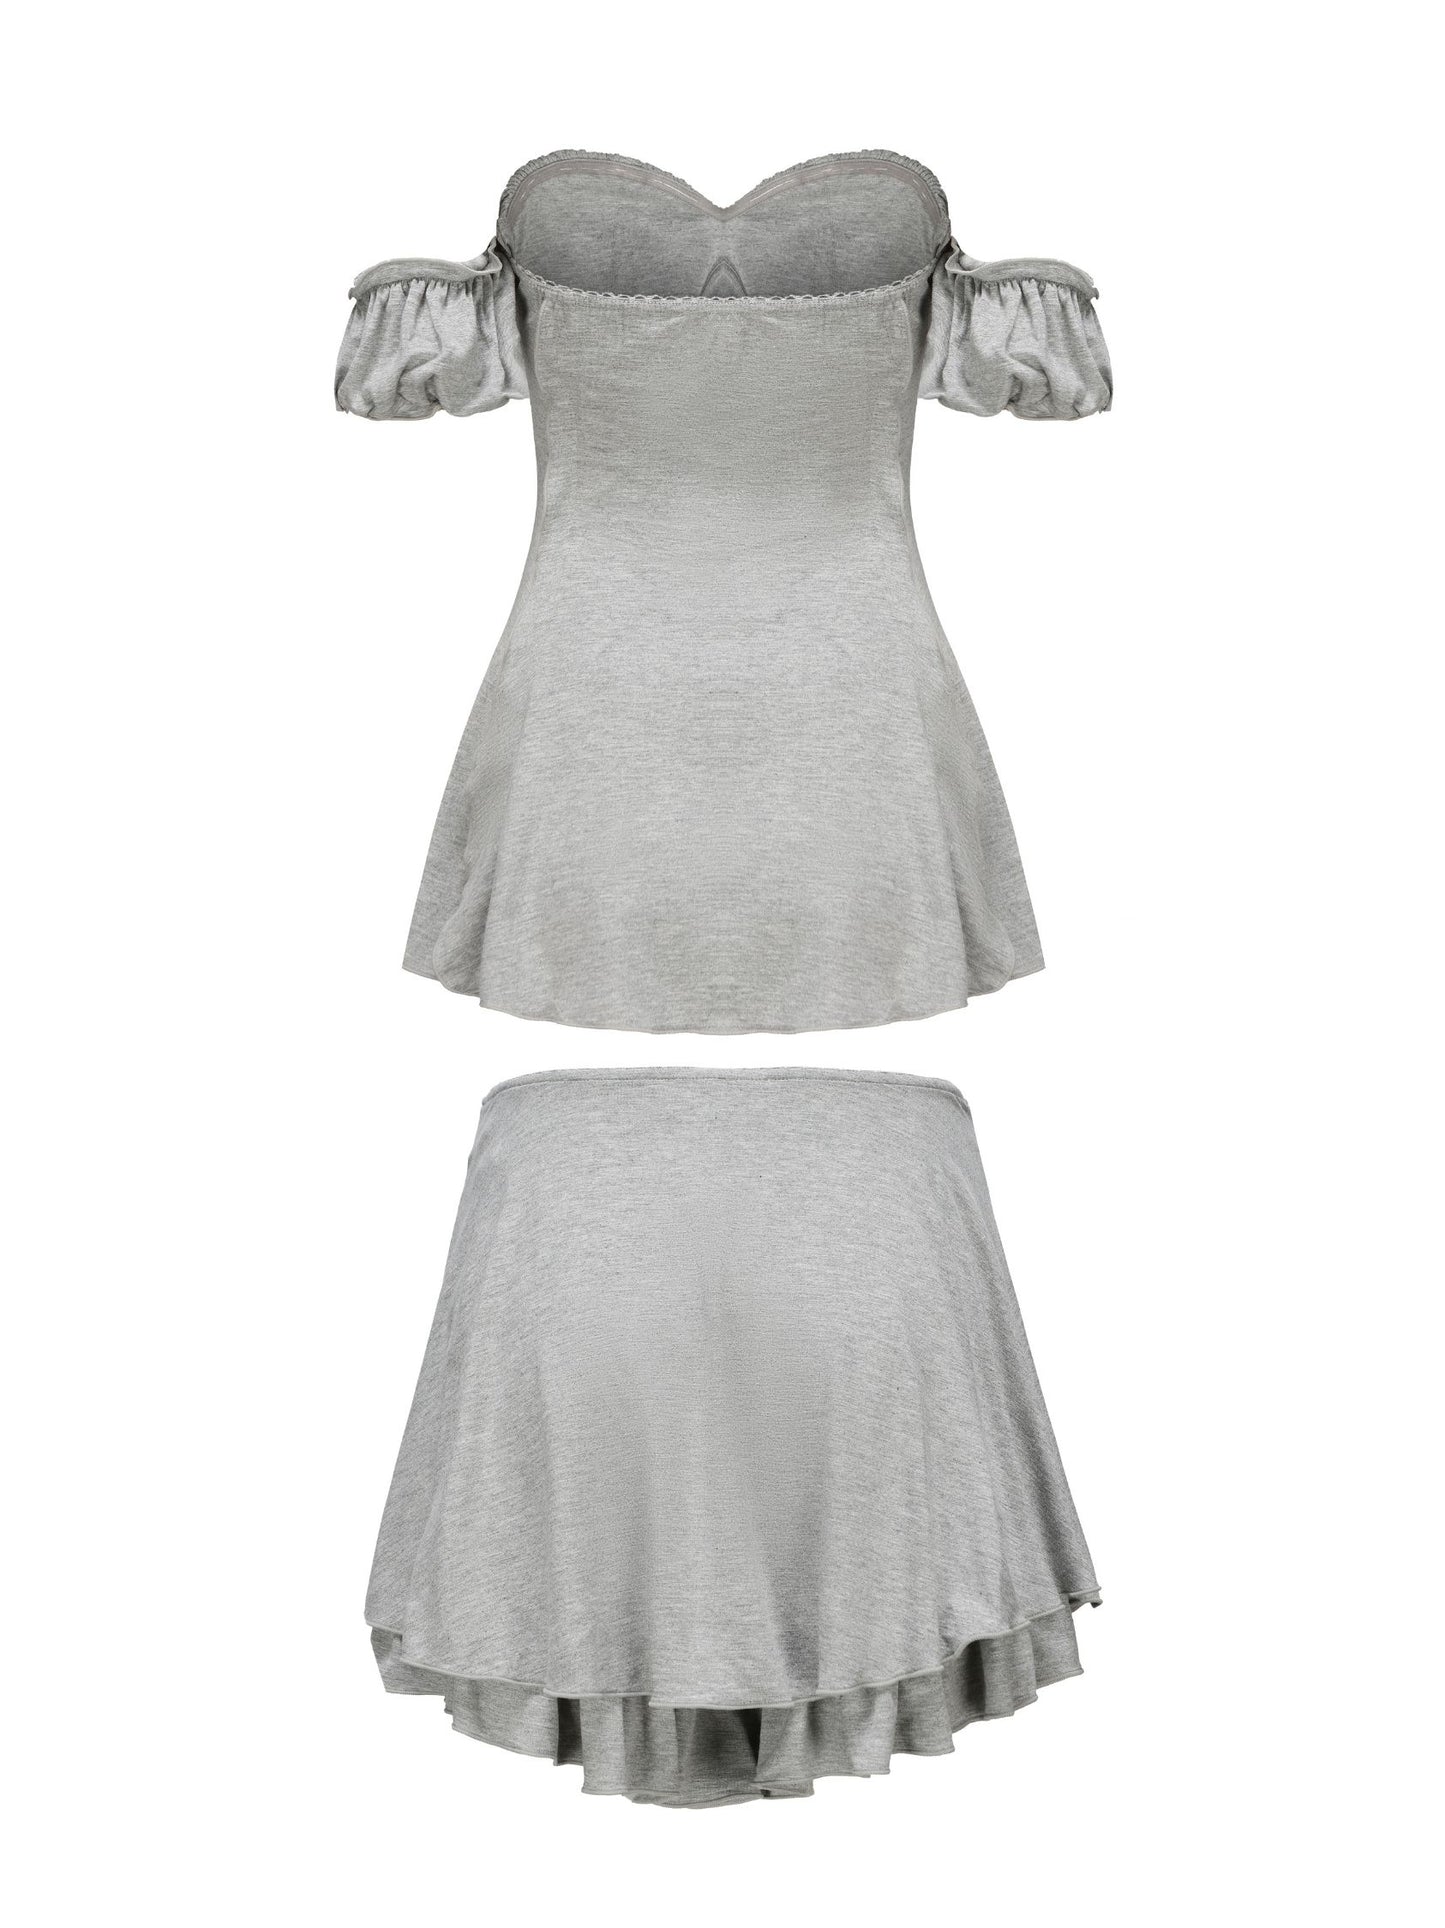 Heidi Top + Skirt (Grey) (Final Sale)